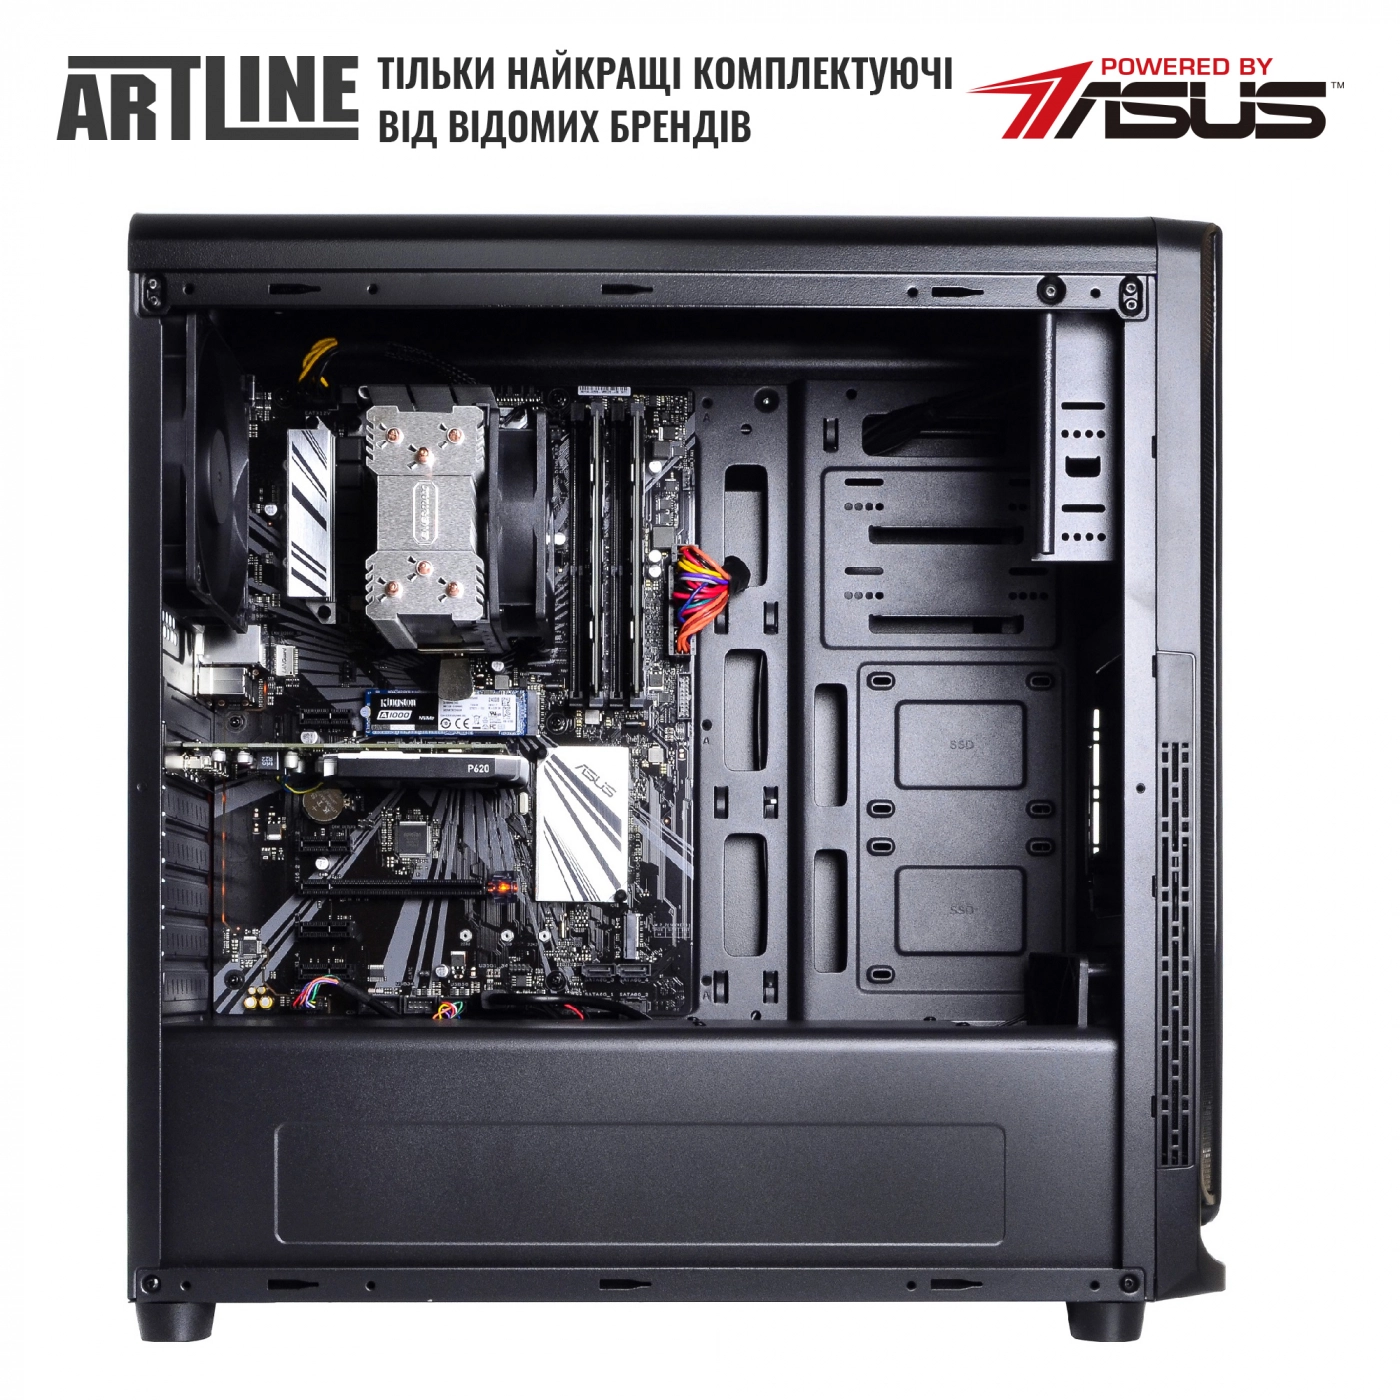 Купити Сервер ARTLINE Business T63v09 - фото 5